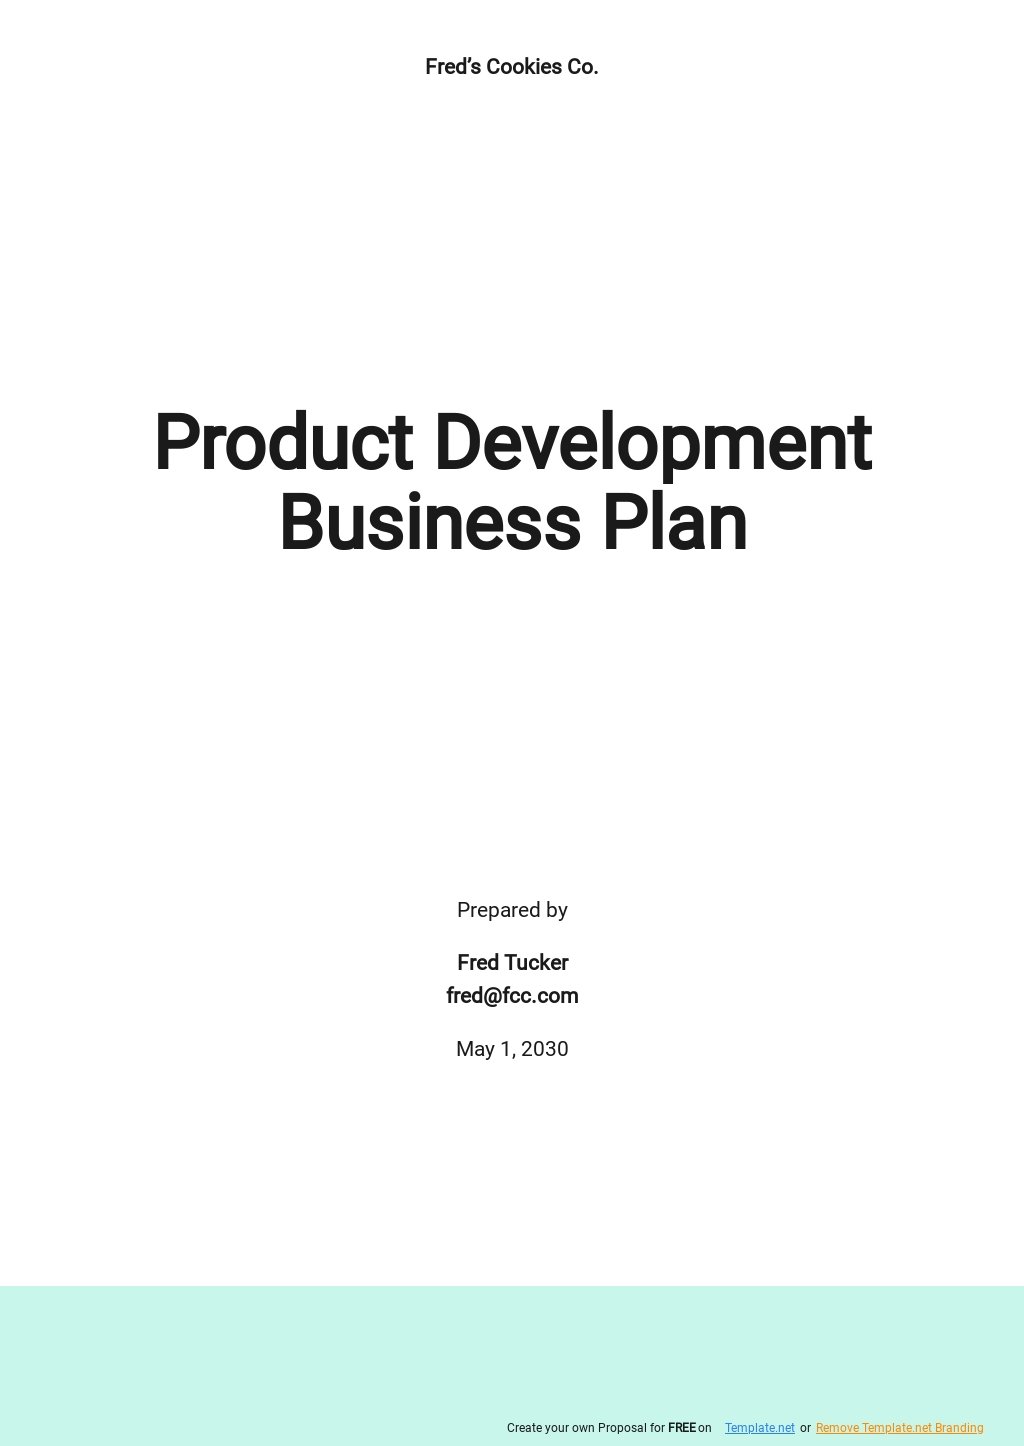 Product Development Business Plan Template.jpe